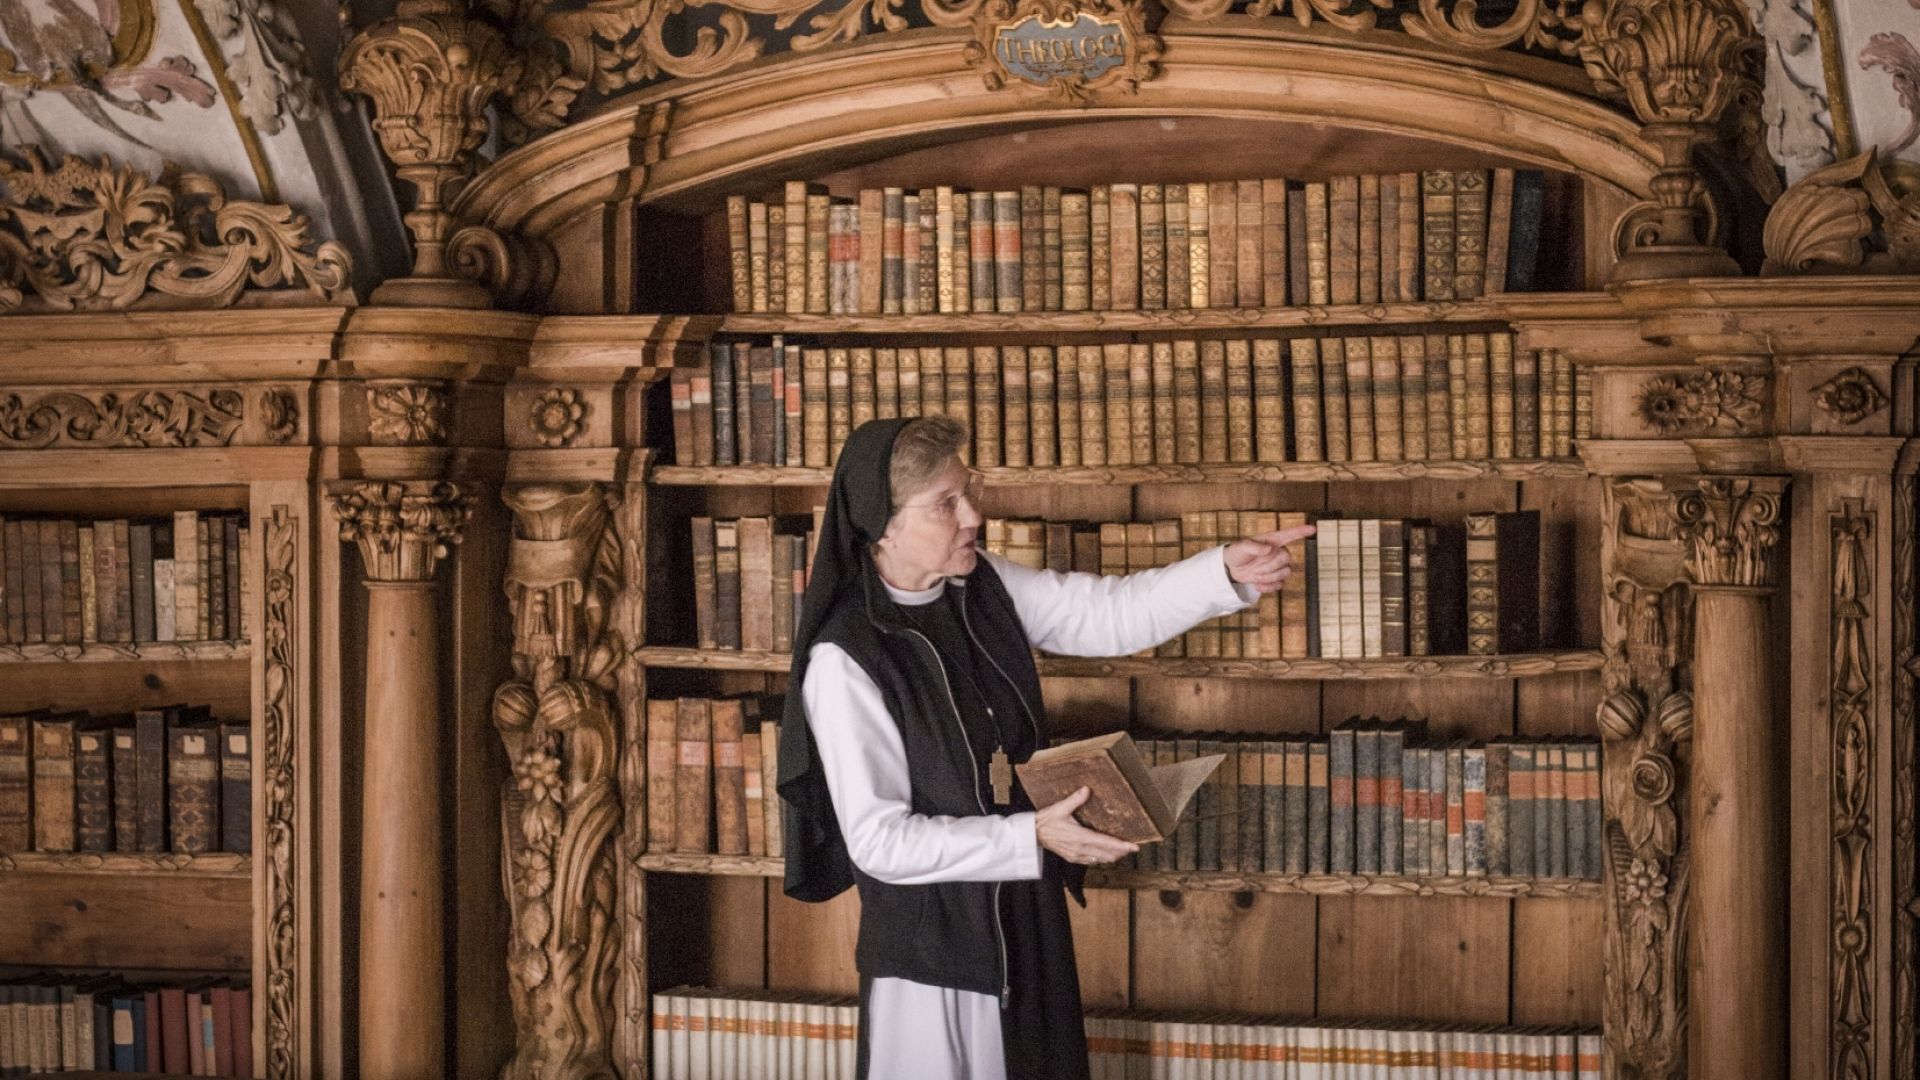 Waldsassen: Abbess Laetitia Fech in the library of the Waldsassen monastery